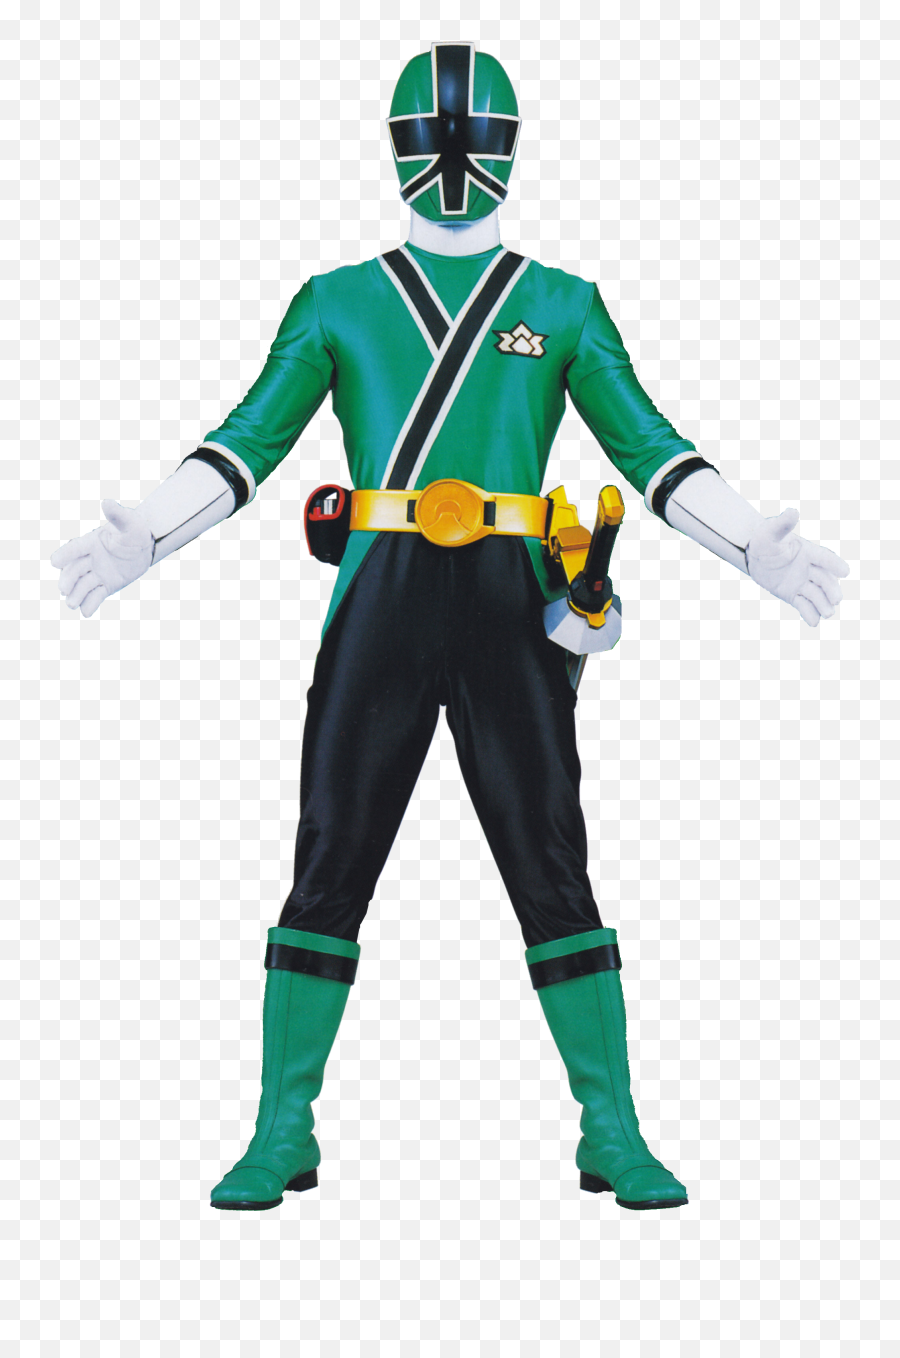 Power Ranger Png Picture - Power Rangers Samurai Green Ranger,Power Ranger Png